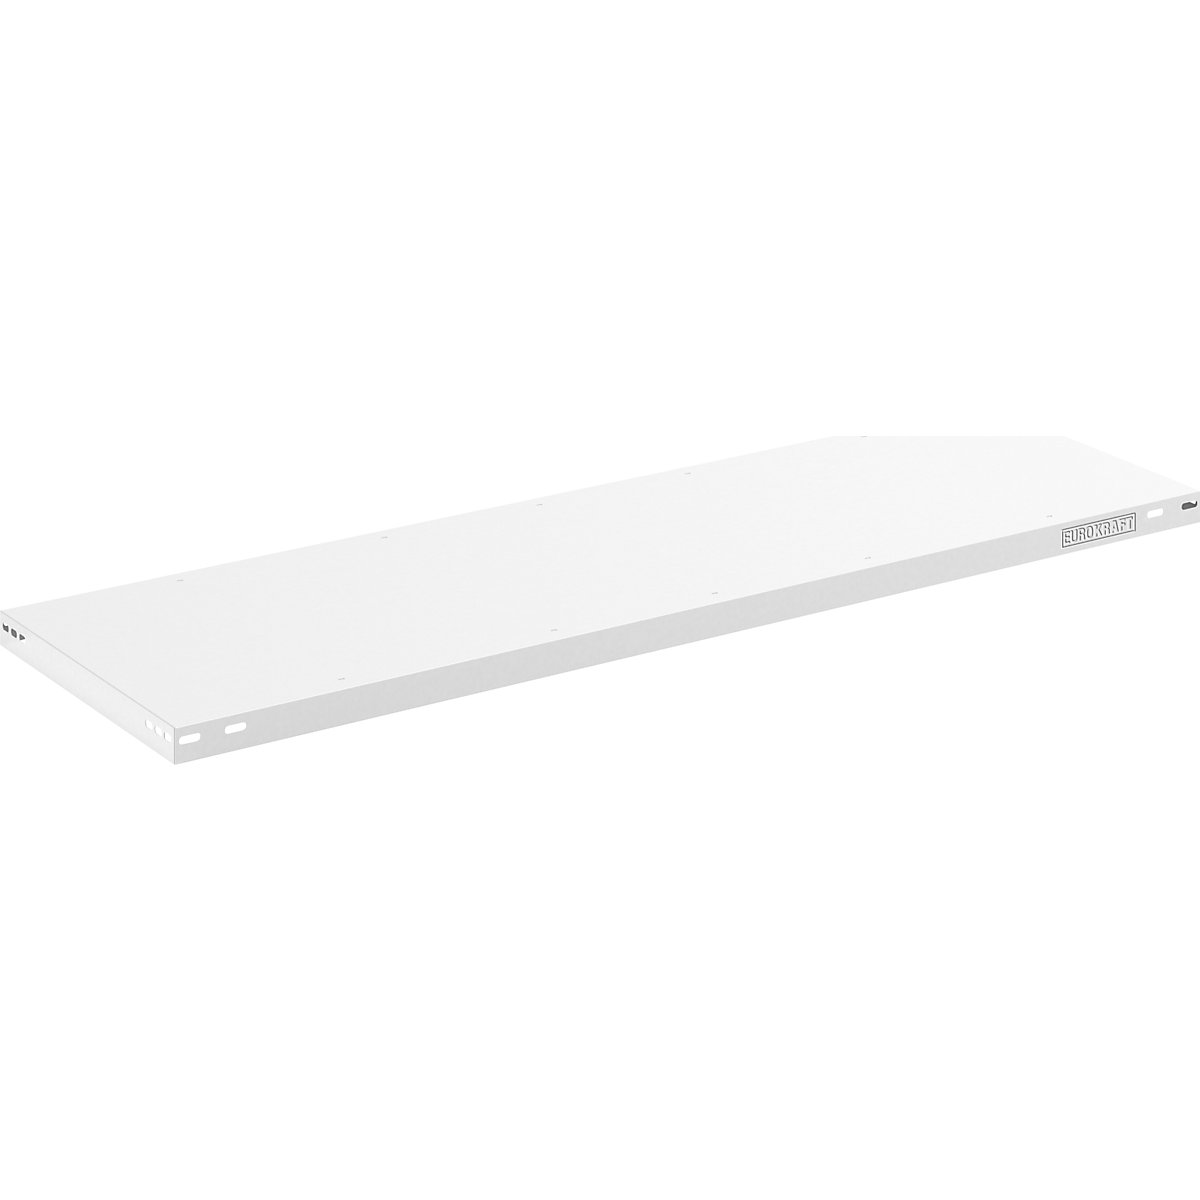 Steel shelf, max. load 125 kg – eurokraft pro, light grey, WxD 1300 x 500 mm